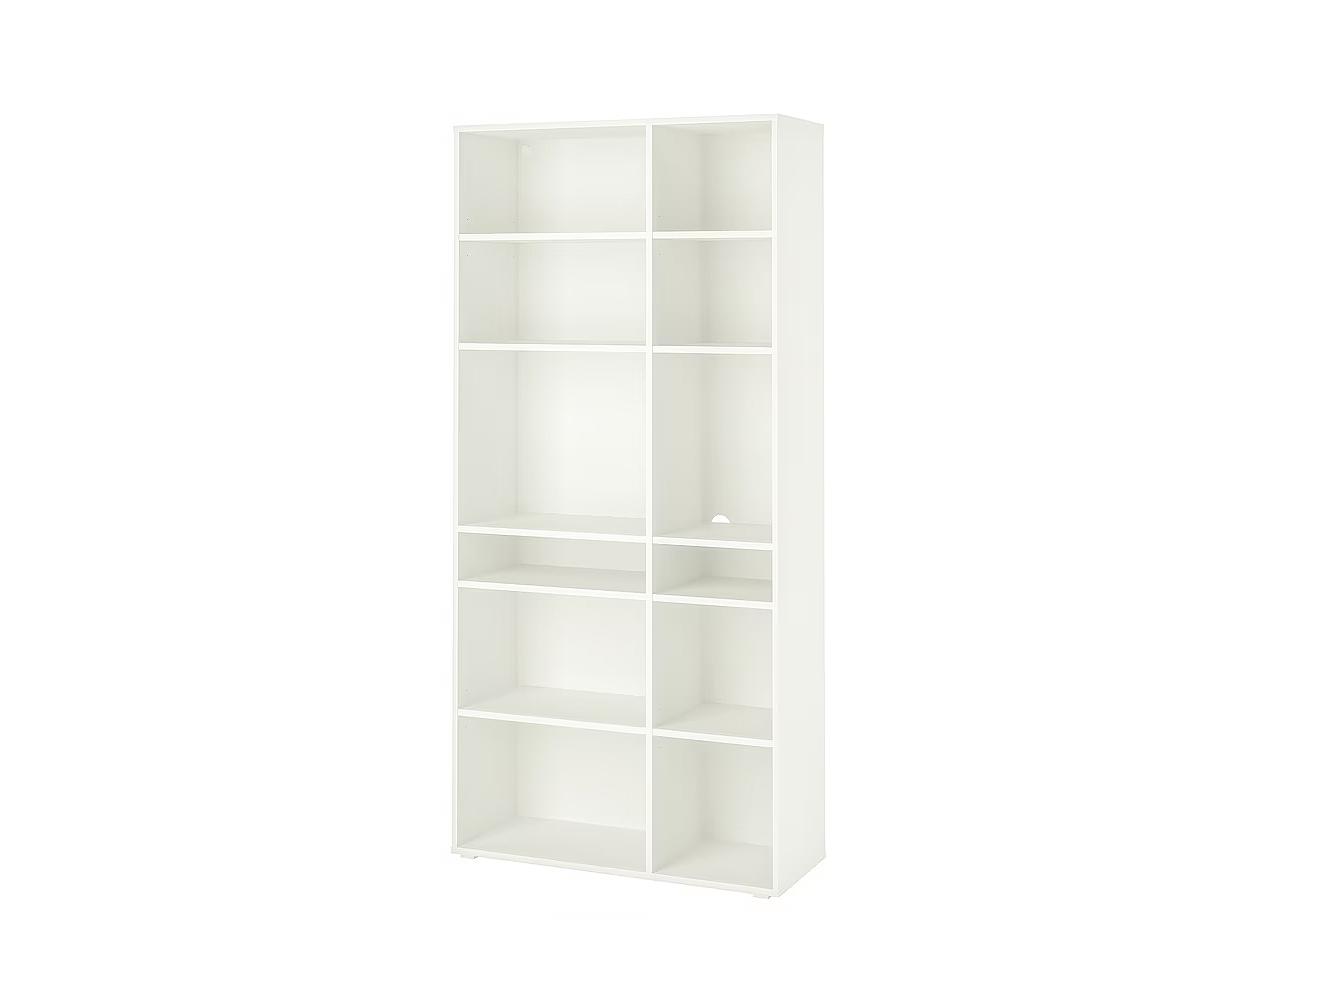 Изображение товара Стеллаж Вихалс 4 white ИКЕА (IKEA), 95x37x200 см на сайте adeta.ru